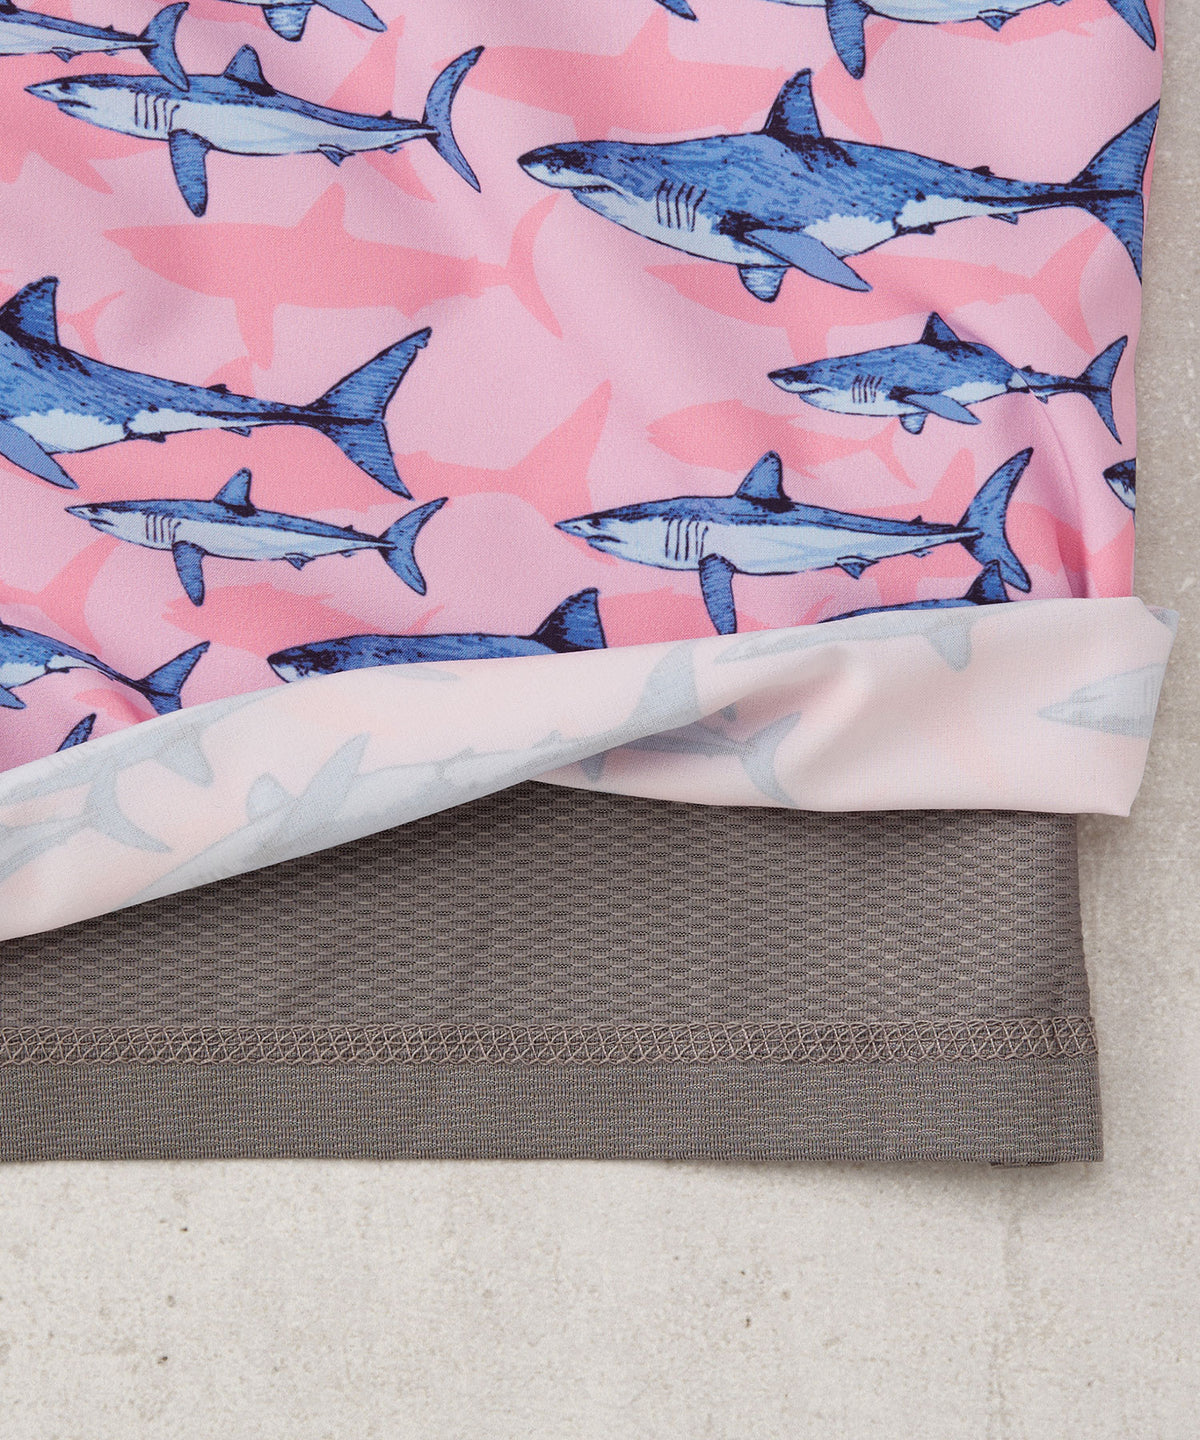 Westport Lifestyle Compo Shark Print Stretch Swim Trunk, Men's Big & Tall